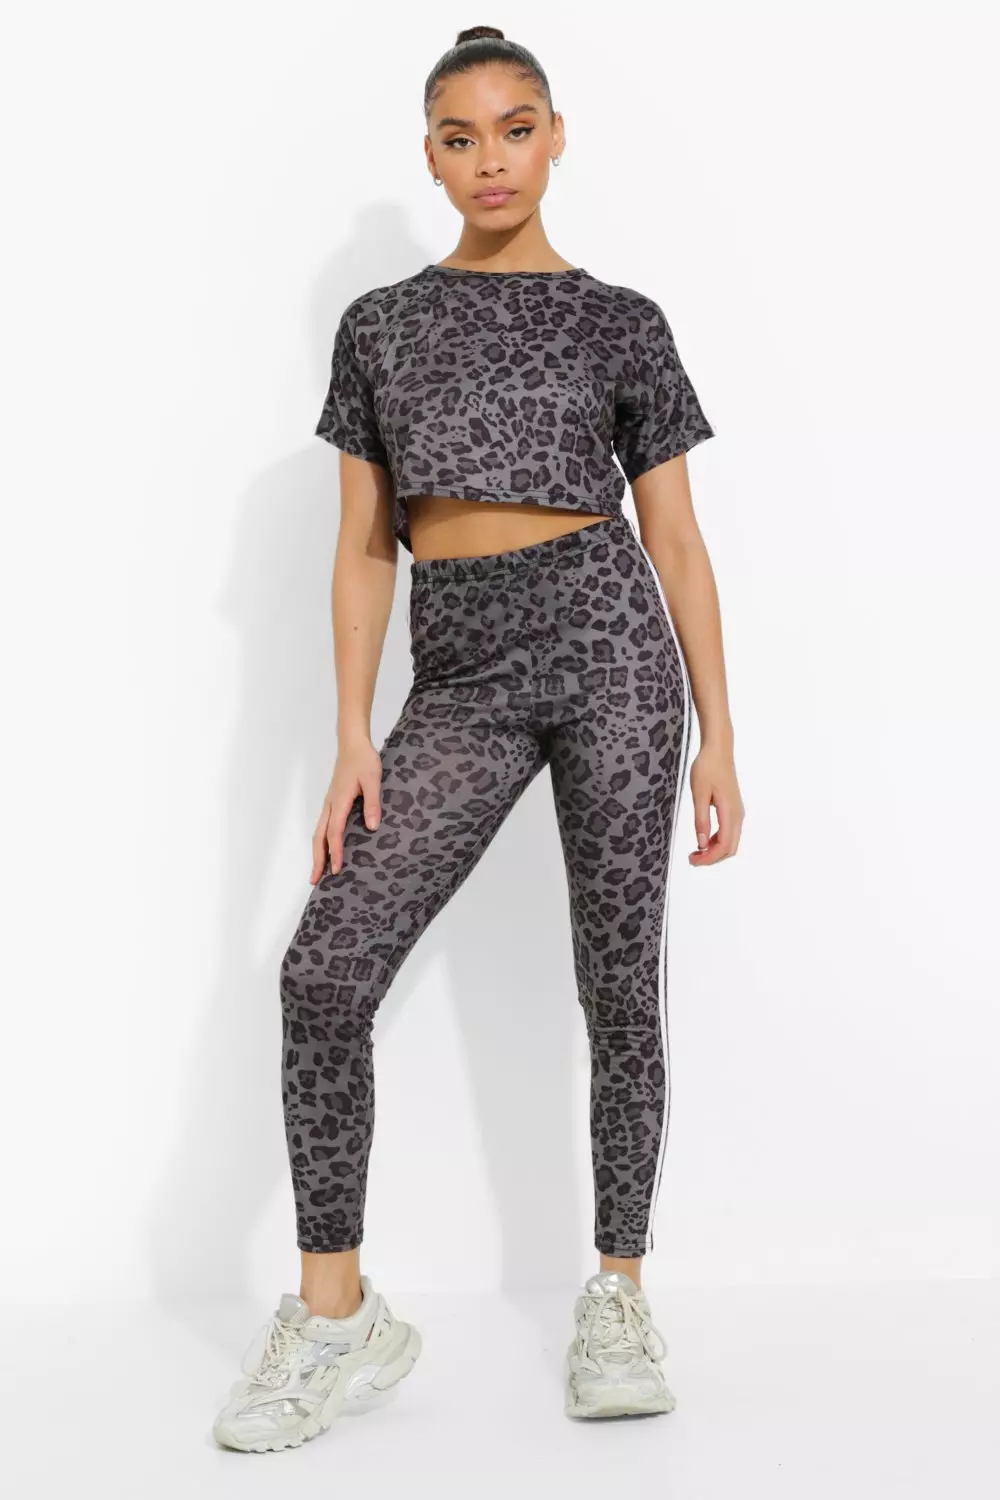 The Artemis Leopard Print Gym Leggings in Black – The Gym Wear Boutique